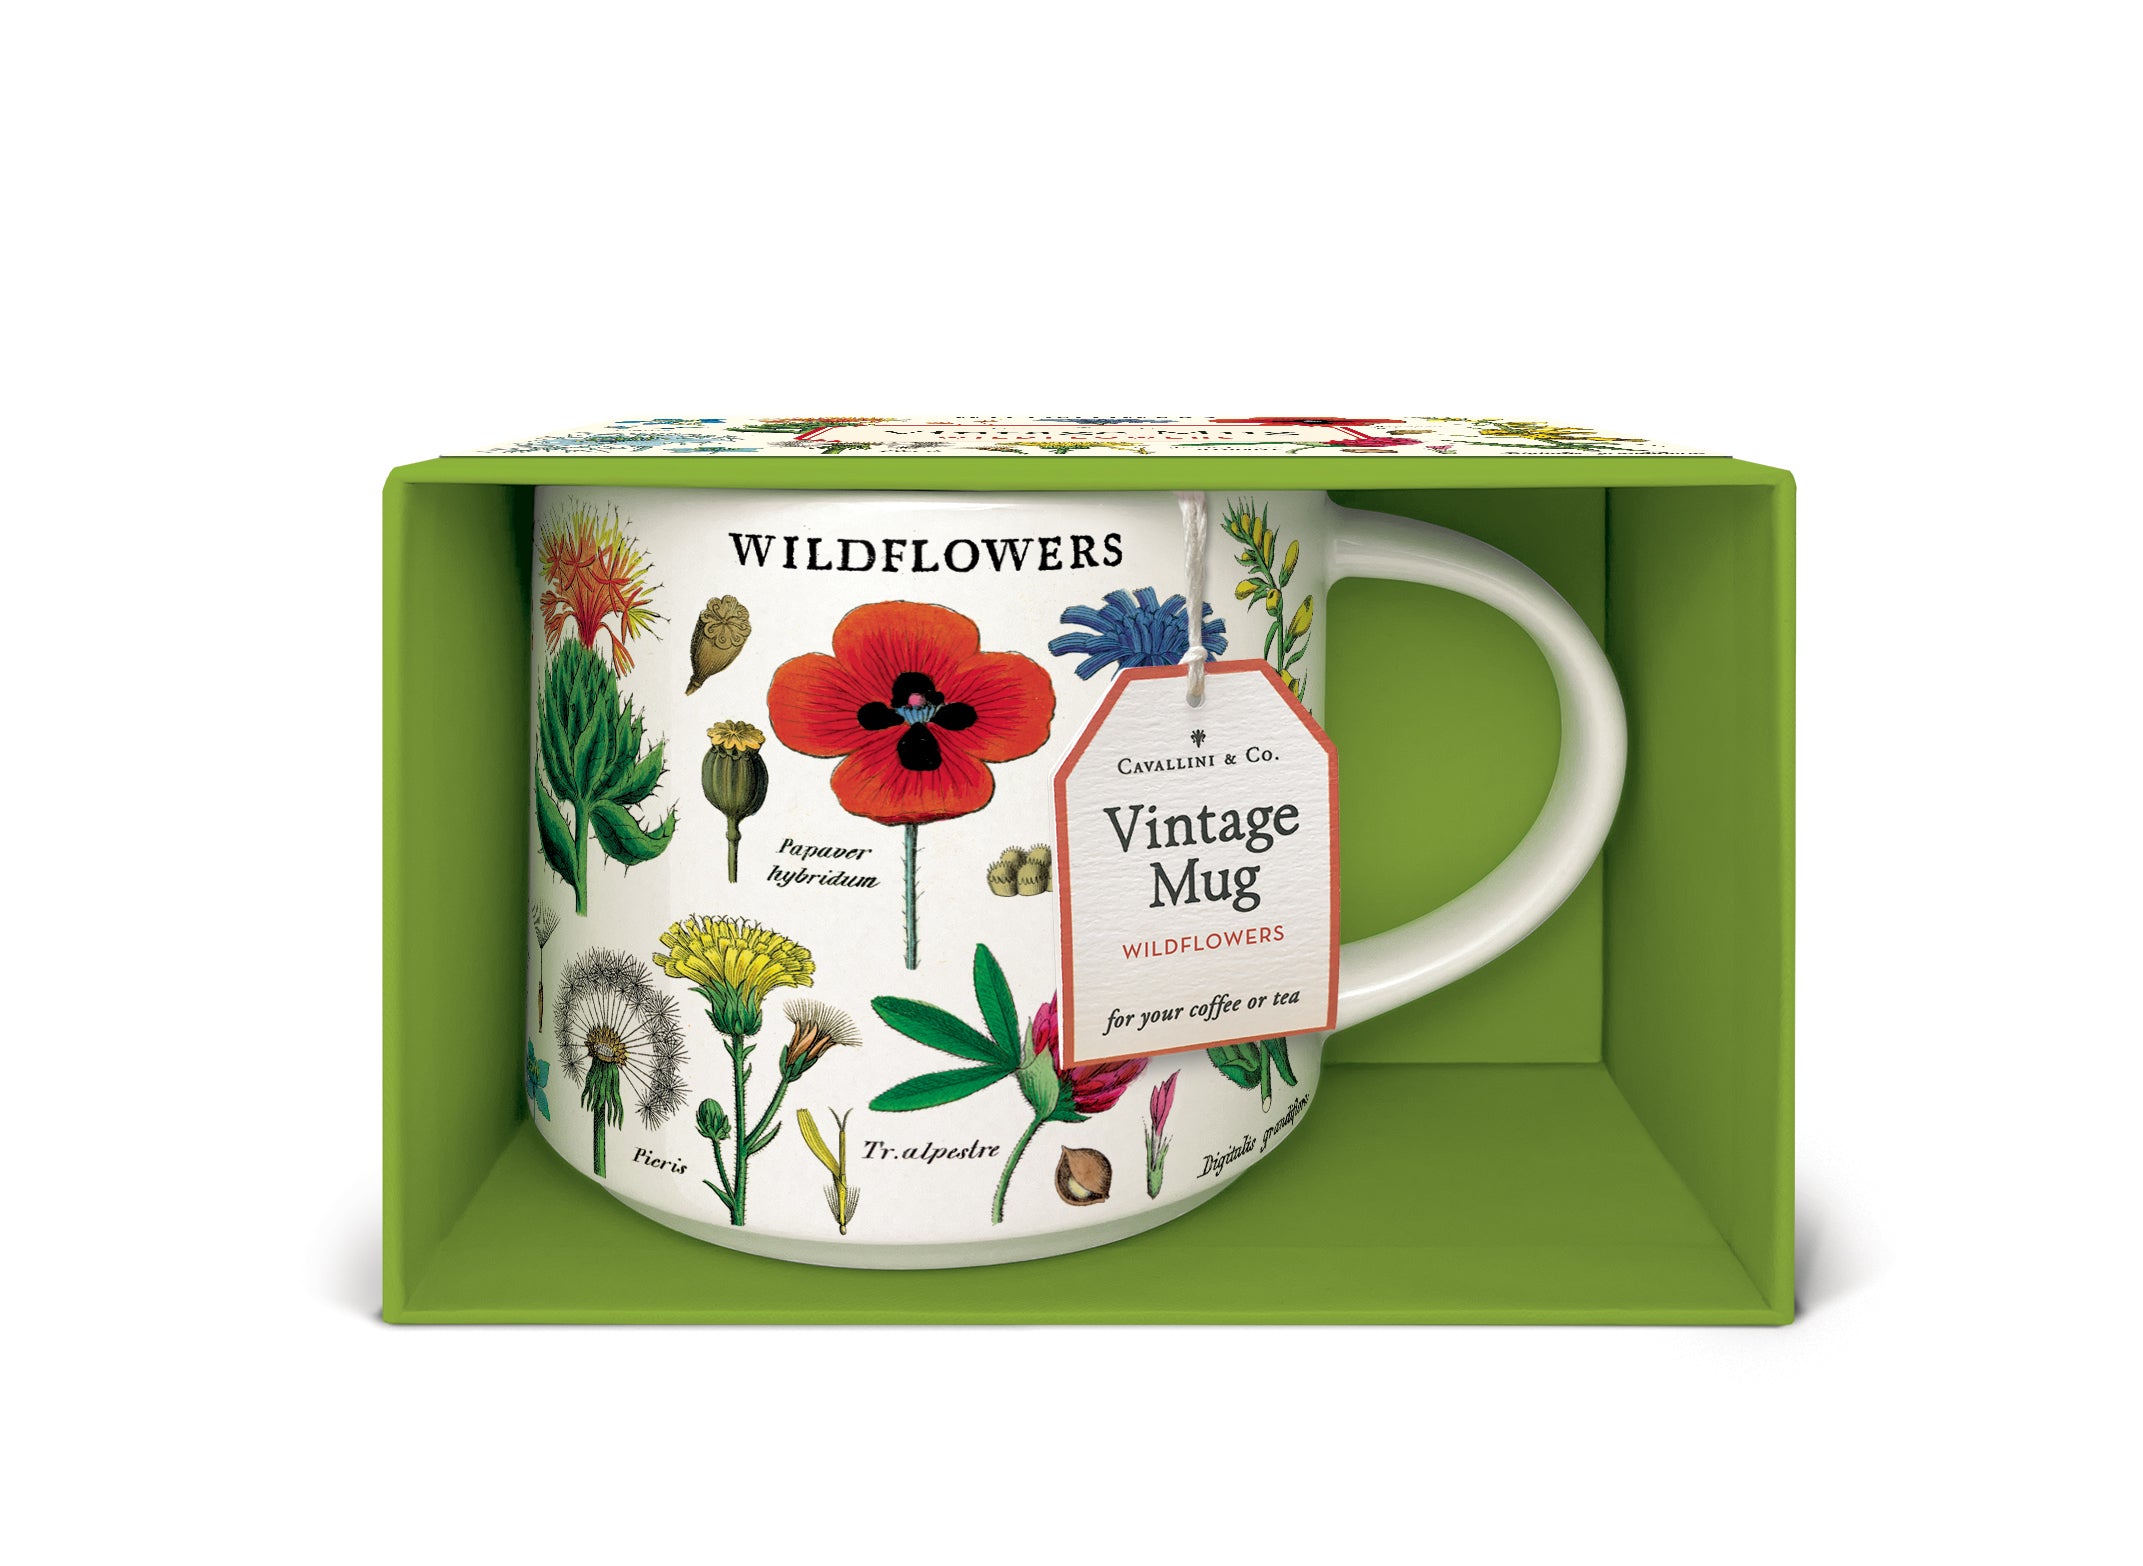 image of Cavallini & Co. Wildflowers Ceramic Mug inside box